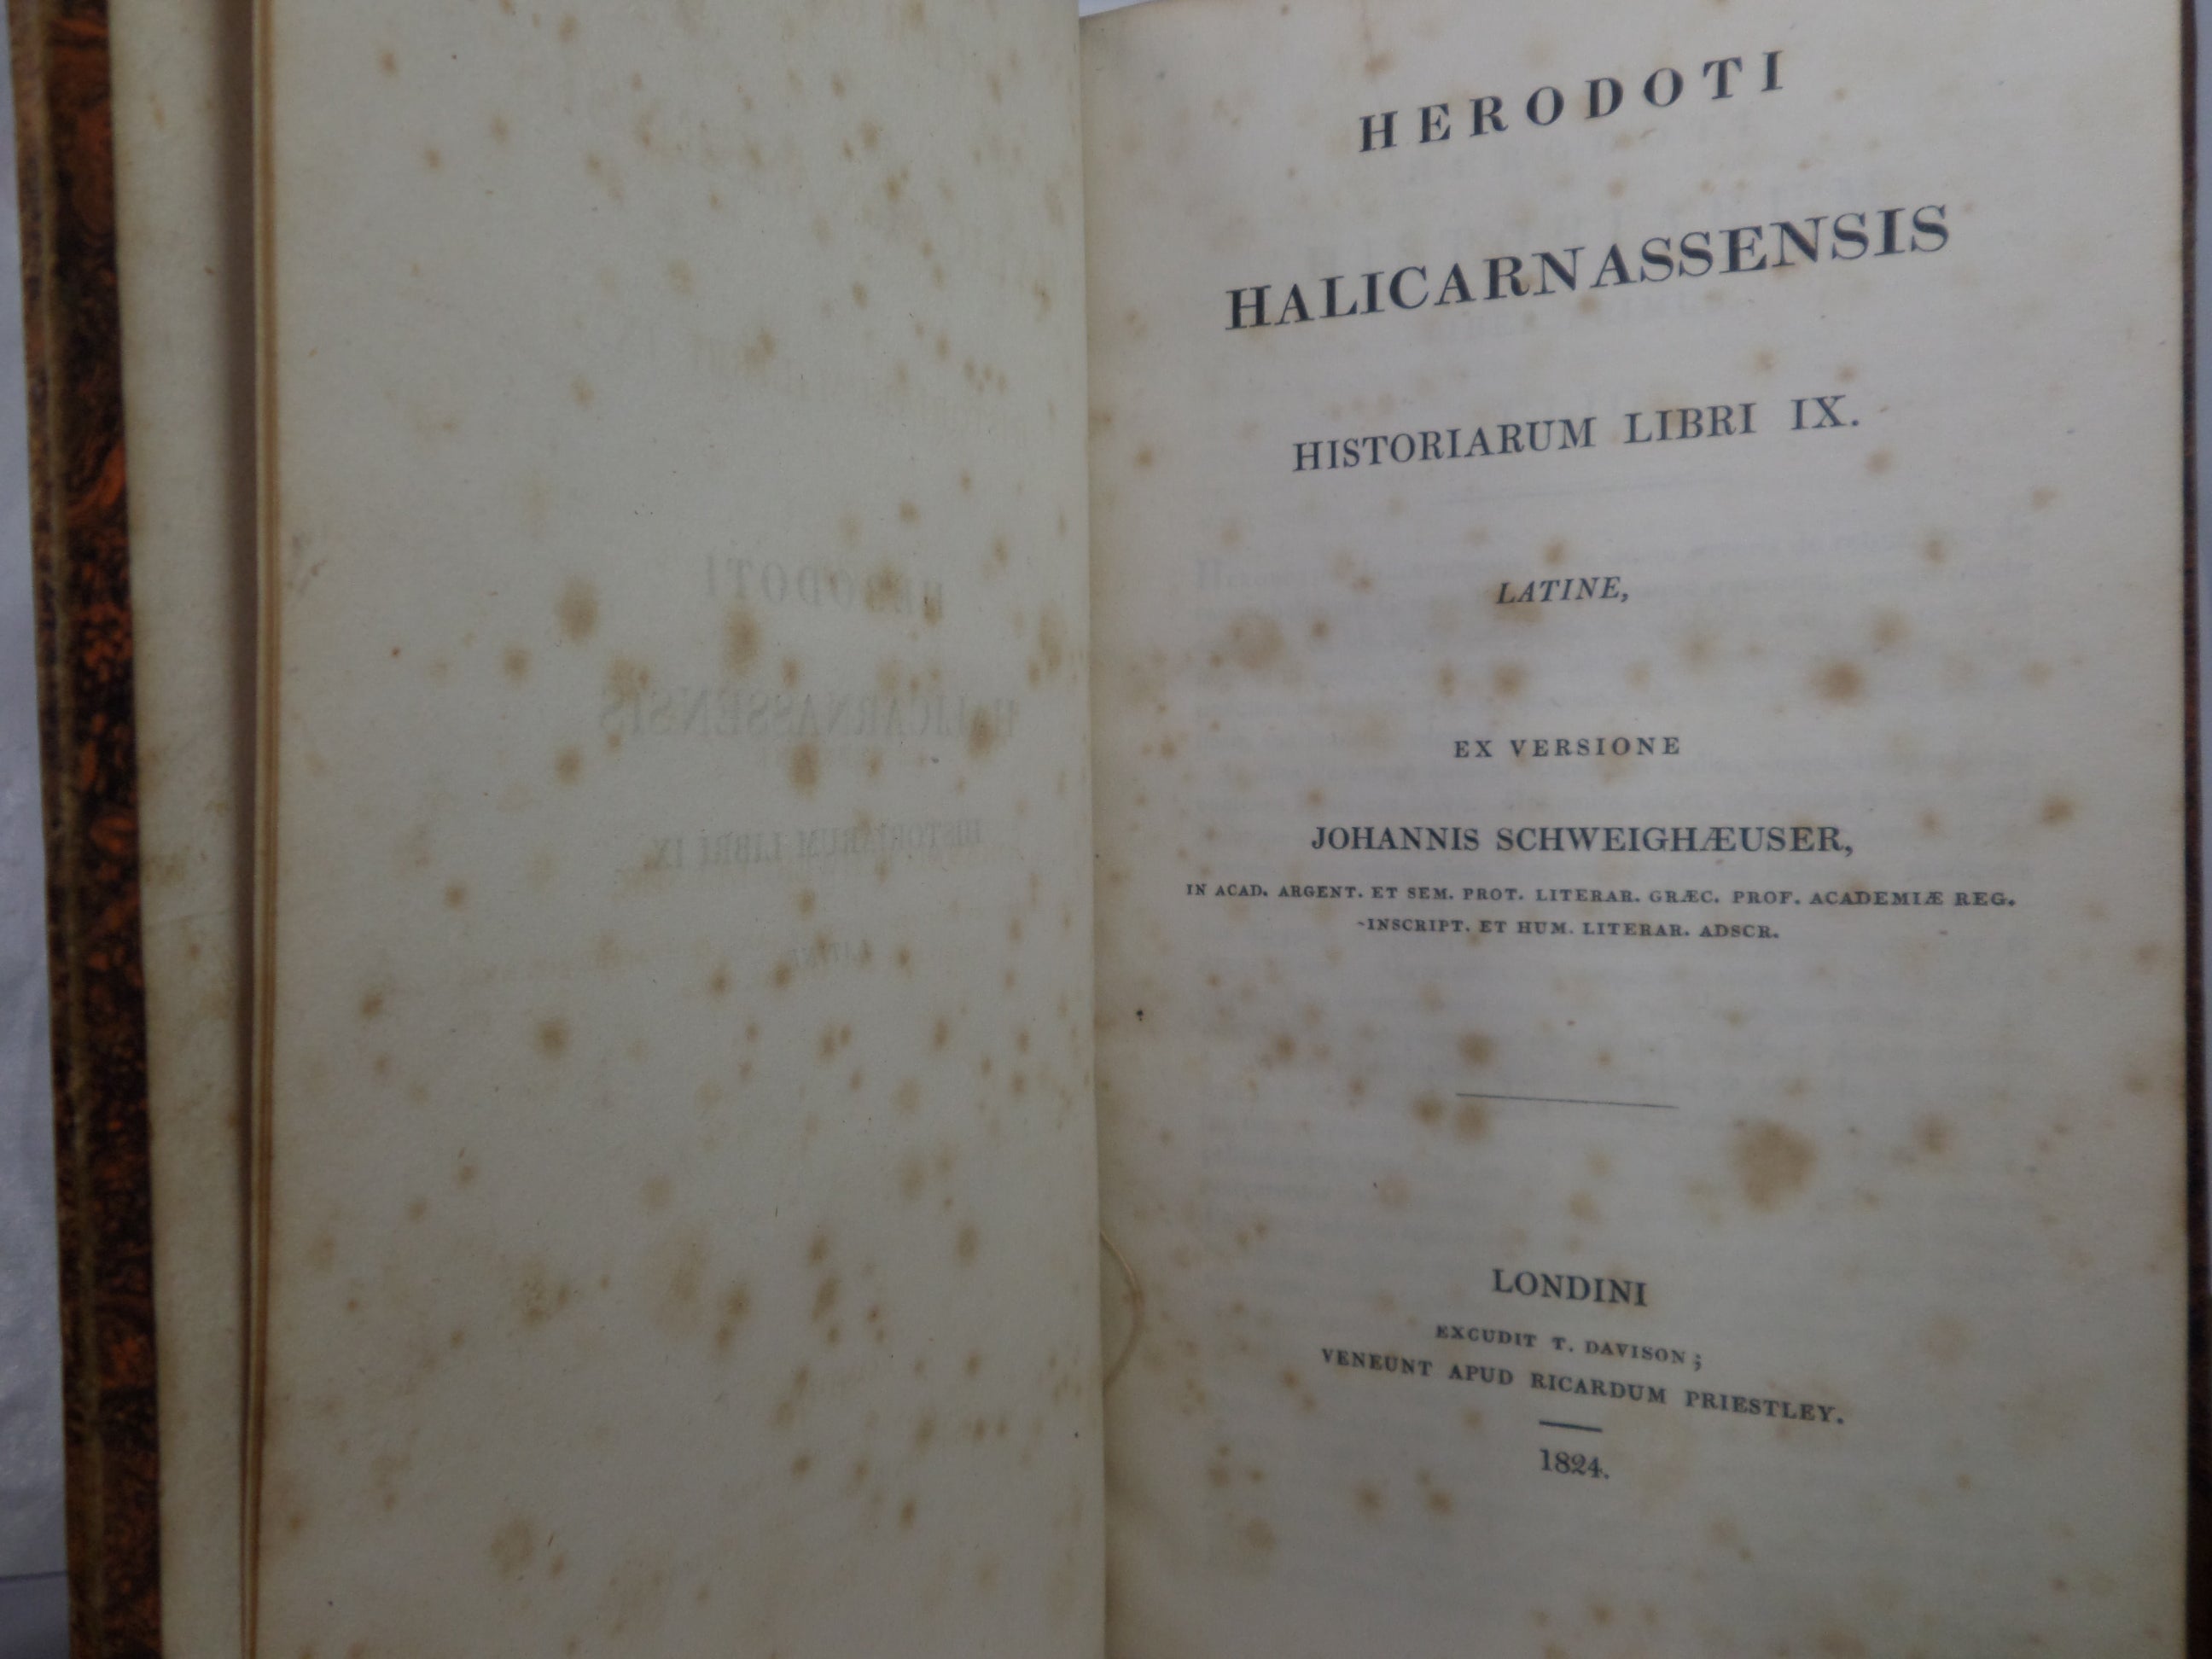 HERODOTI HALICARNASSENSIS HISTORIARUM 1824 LEATHER BINDING, LATIN HORACE